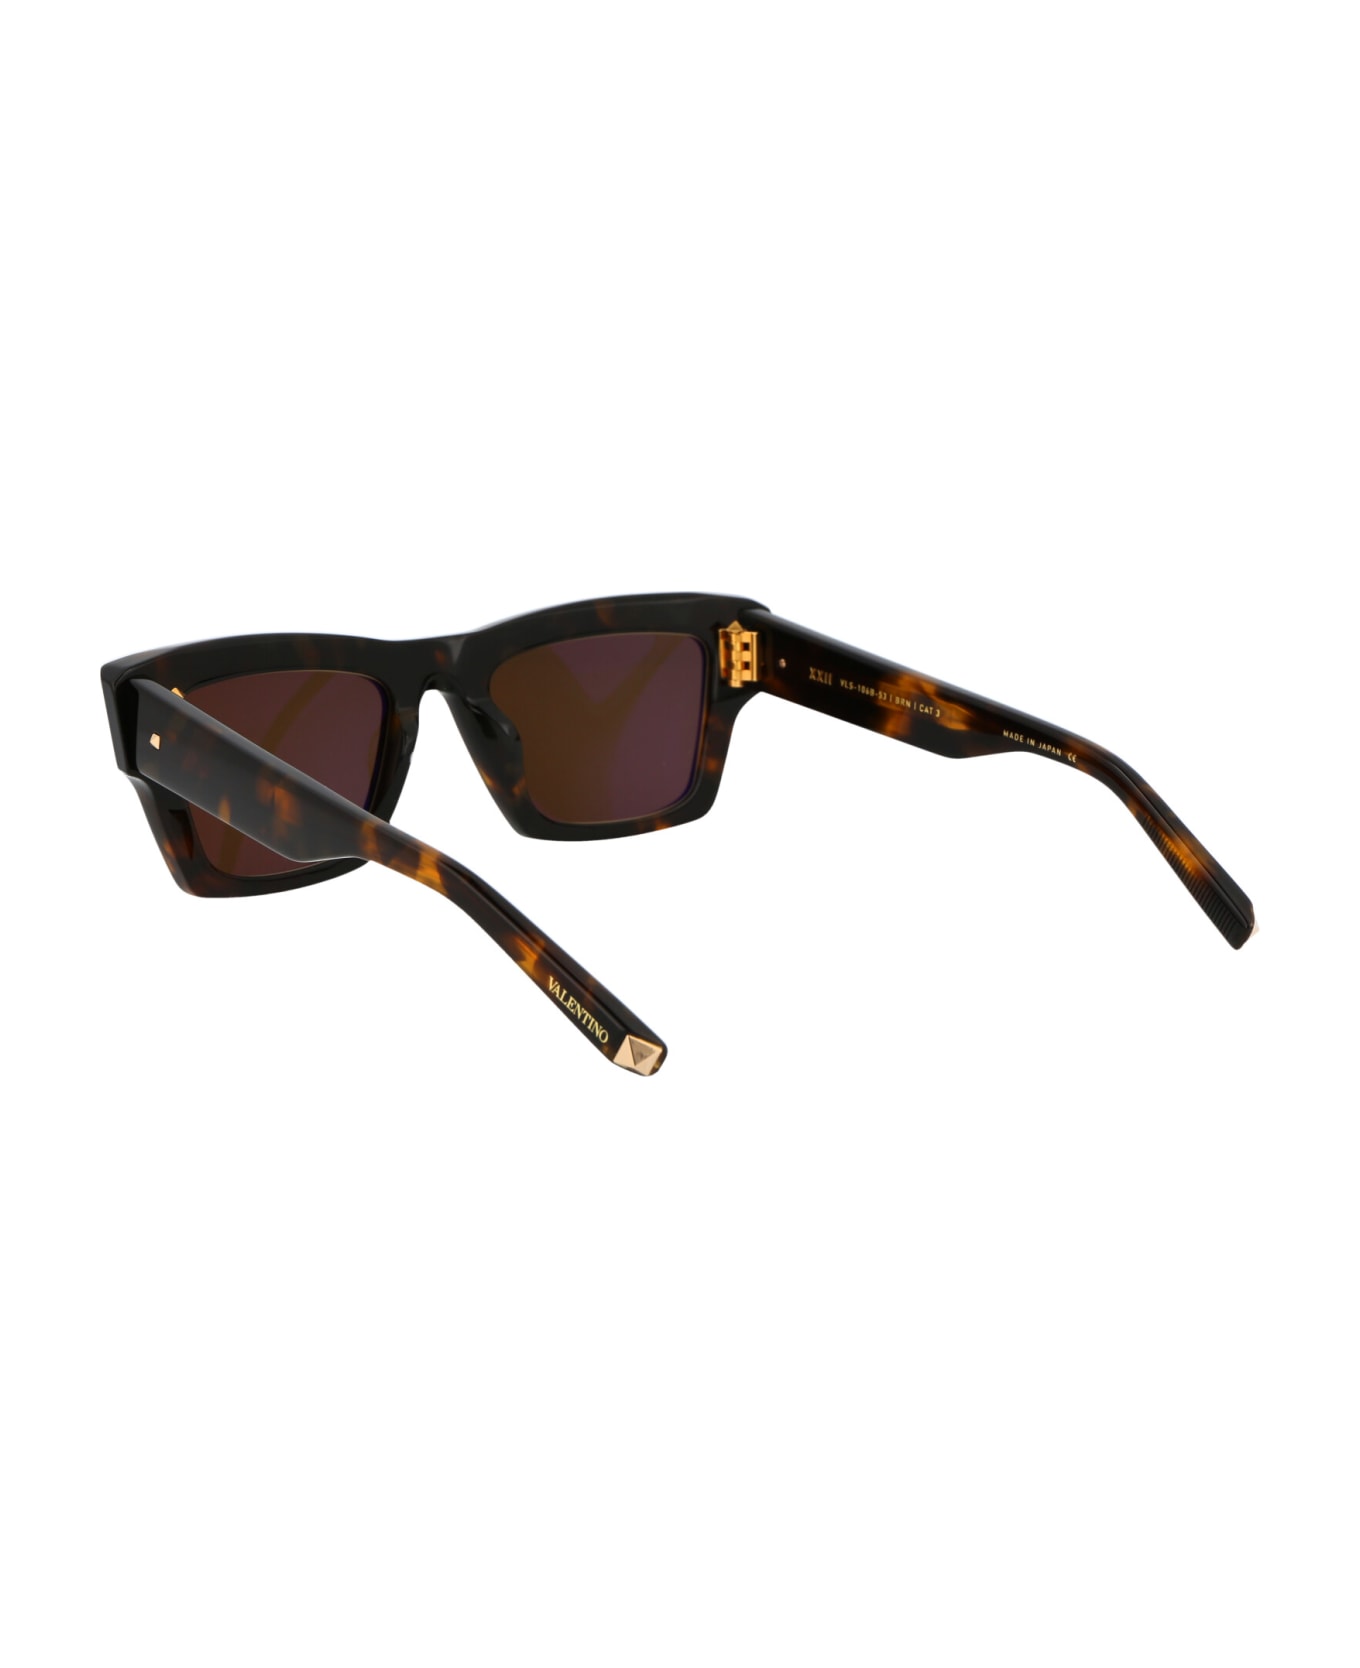 Valentino Eyewear Xxii Sunglasses - Brown Tortoise w/Dark Brown